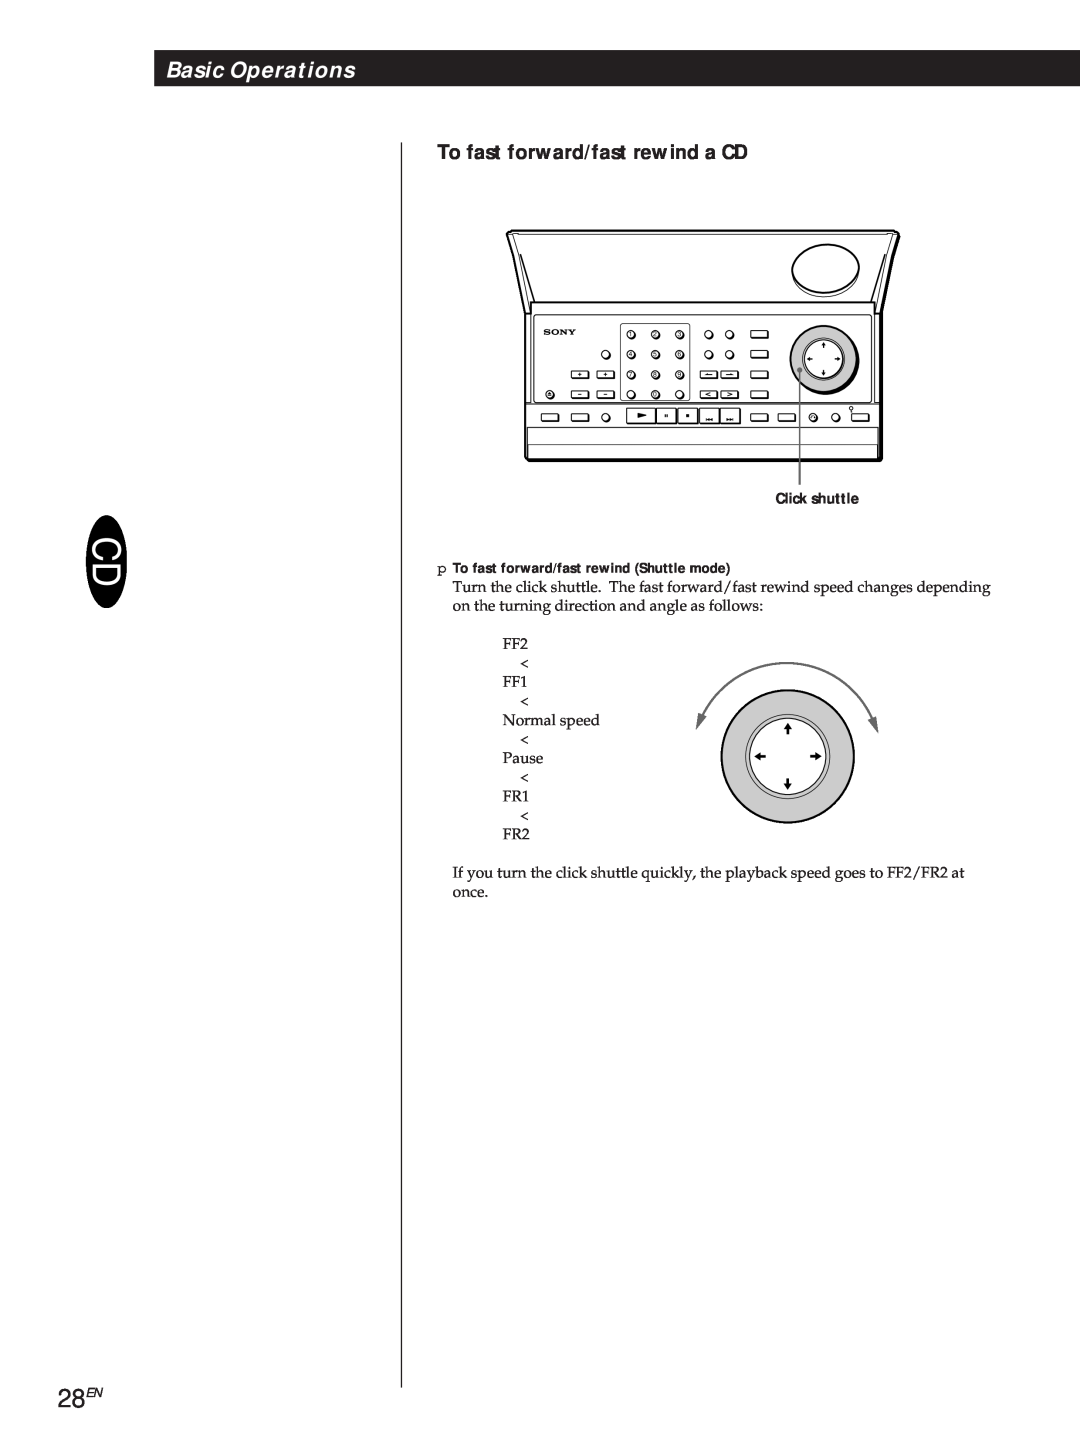 Sony DVP3980 manual 28EN, Basic Operations, To fast forward/fast rewind a CD 